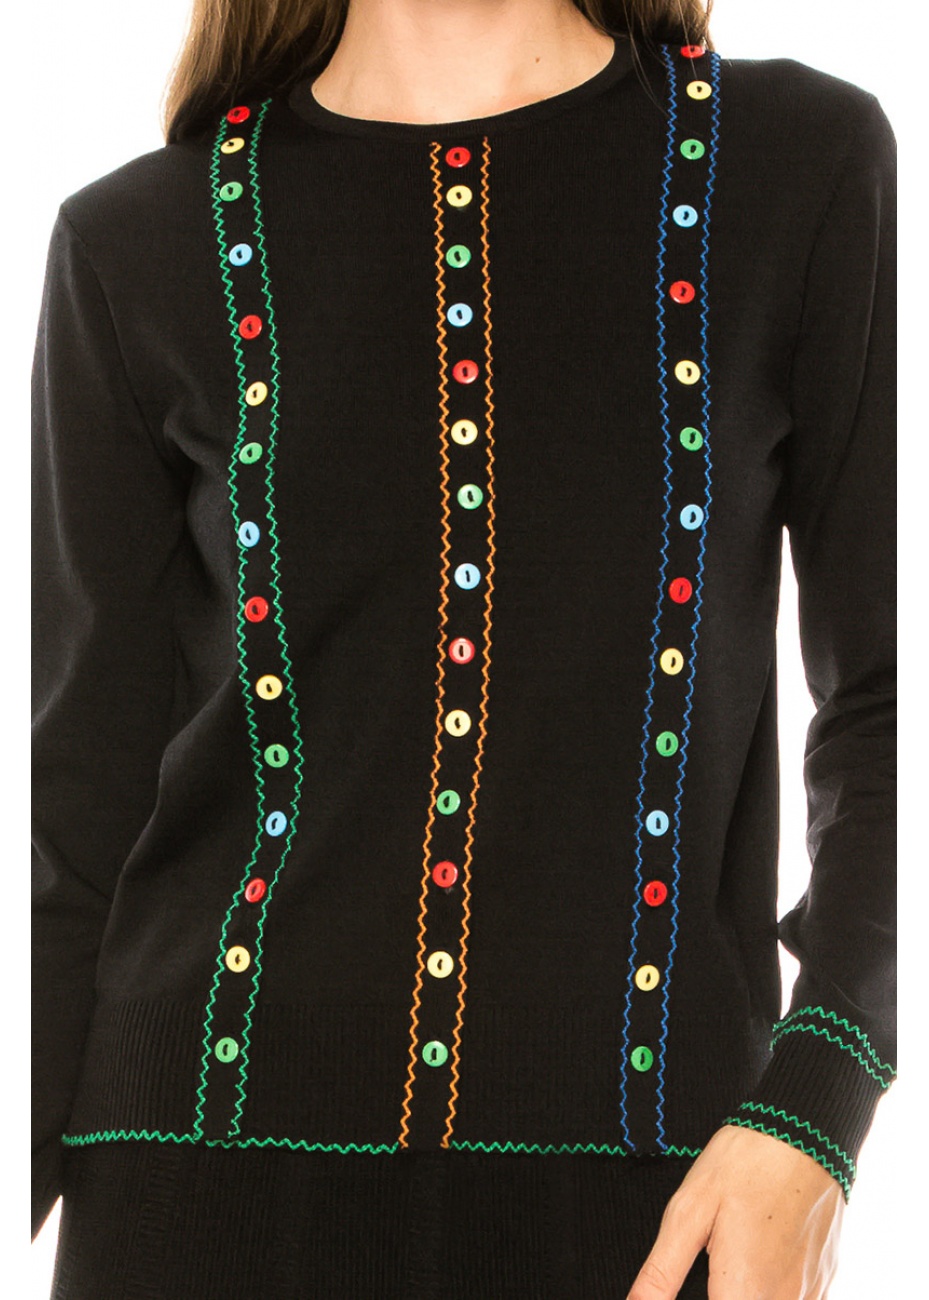 Sweater S2924 Black